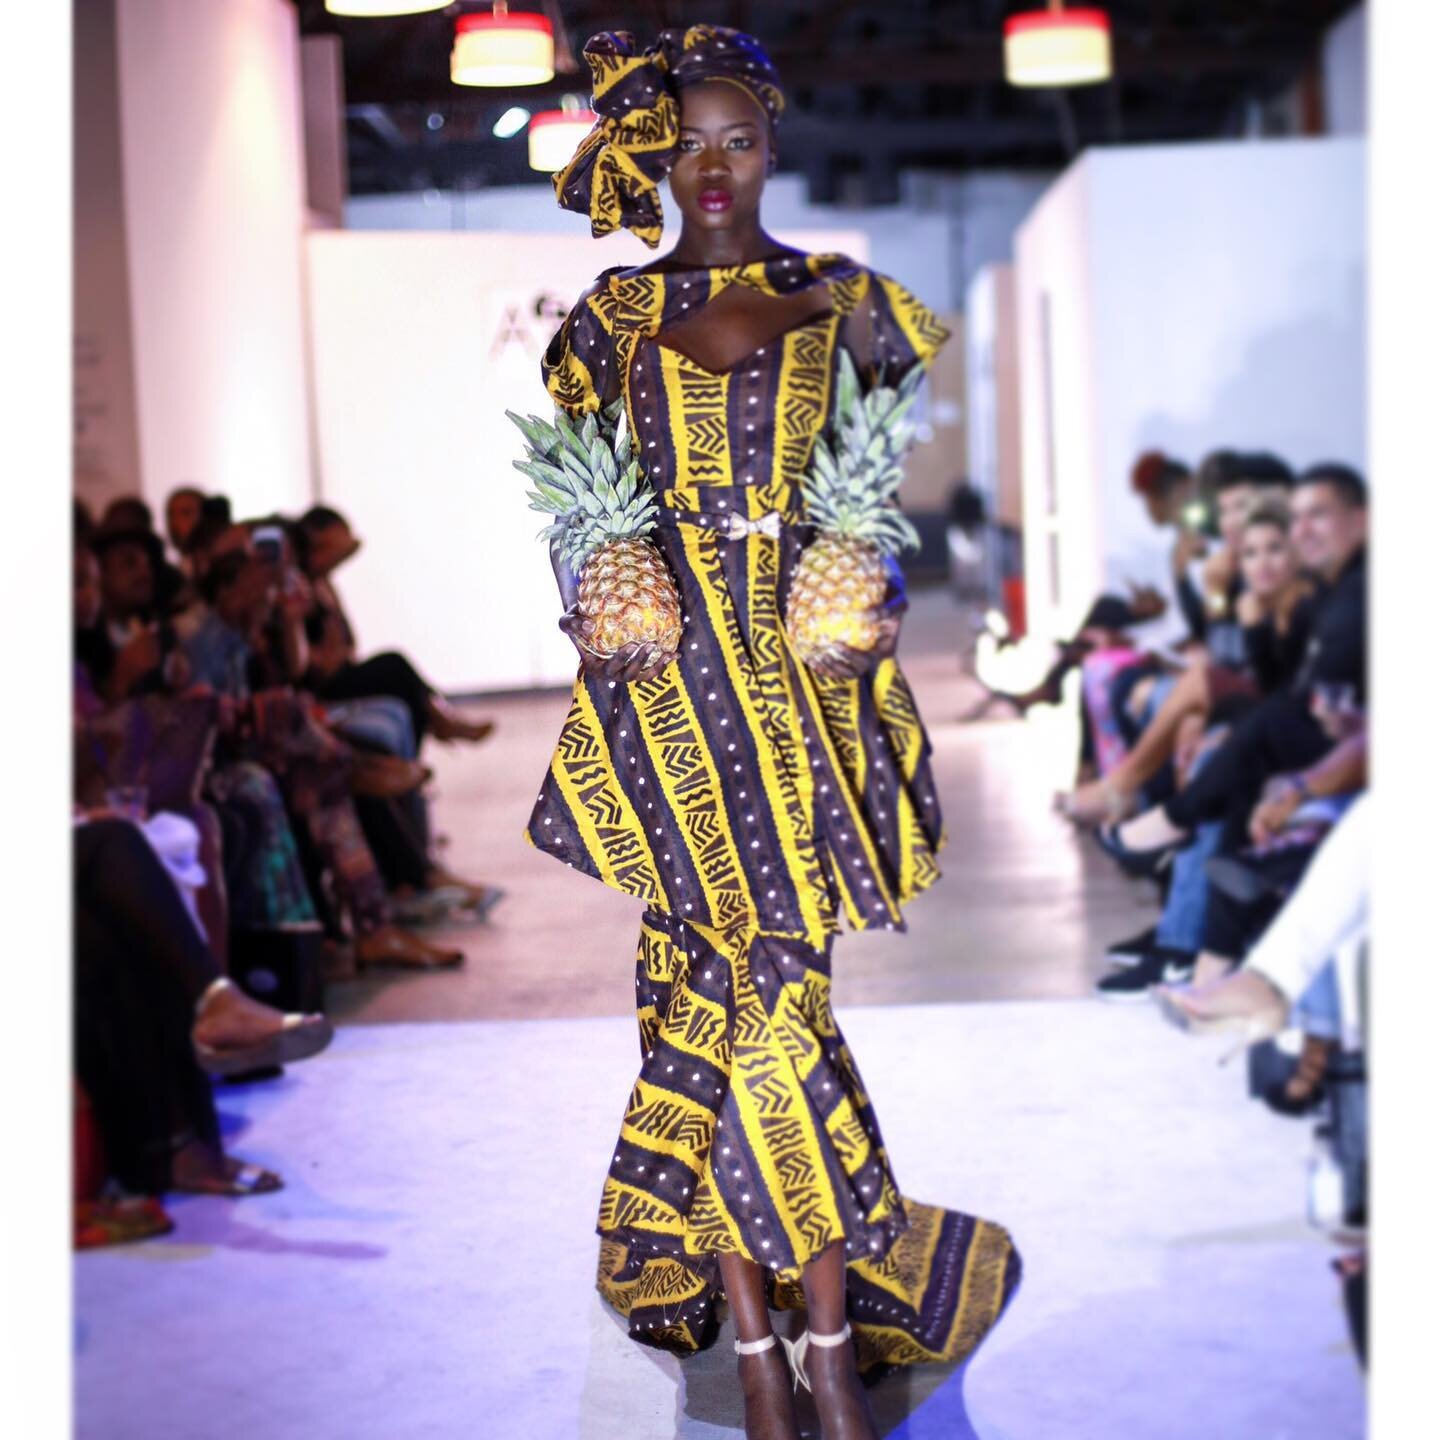 Prints &amp; pineapples. 
@josefa_da_silva 
______________
#afwla #africafashionweek #africanprint #lafw #runwaymodel #emergingdesigner #africandesigners #fashionweek #blackmodels #blackgirlmagic #melanin